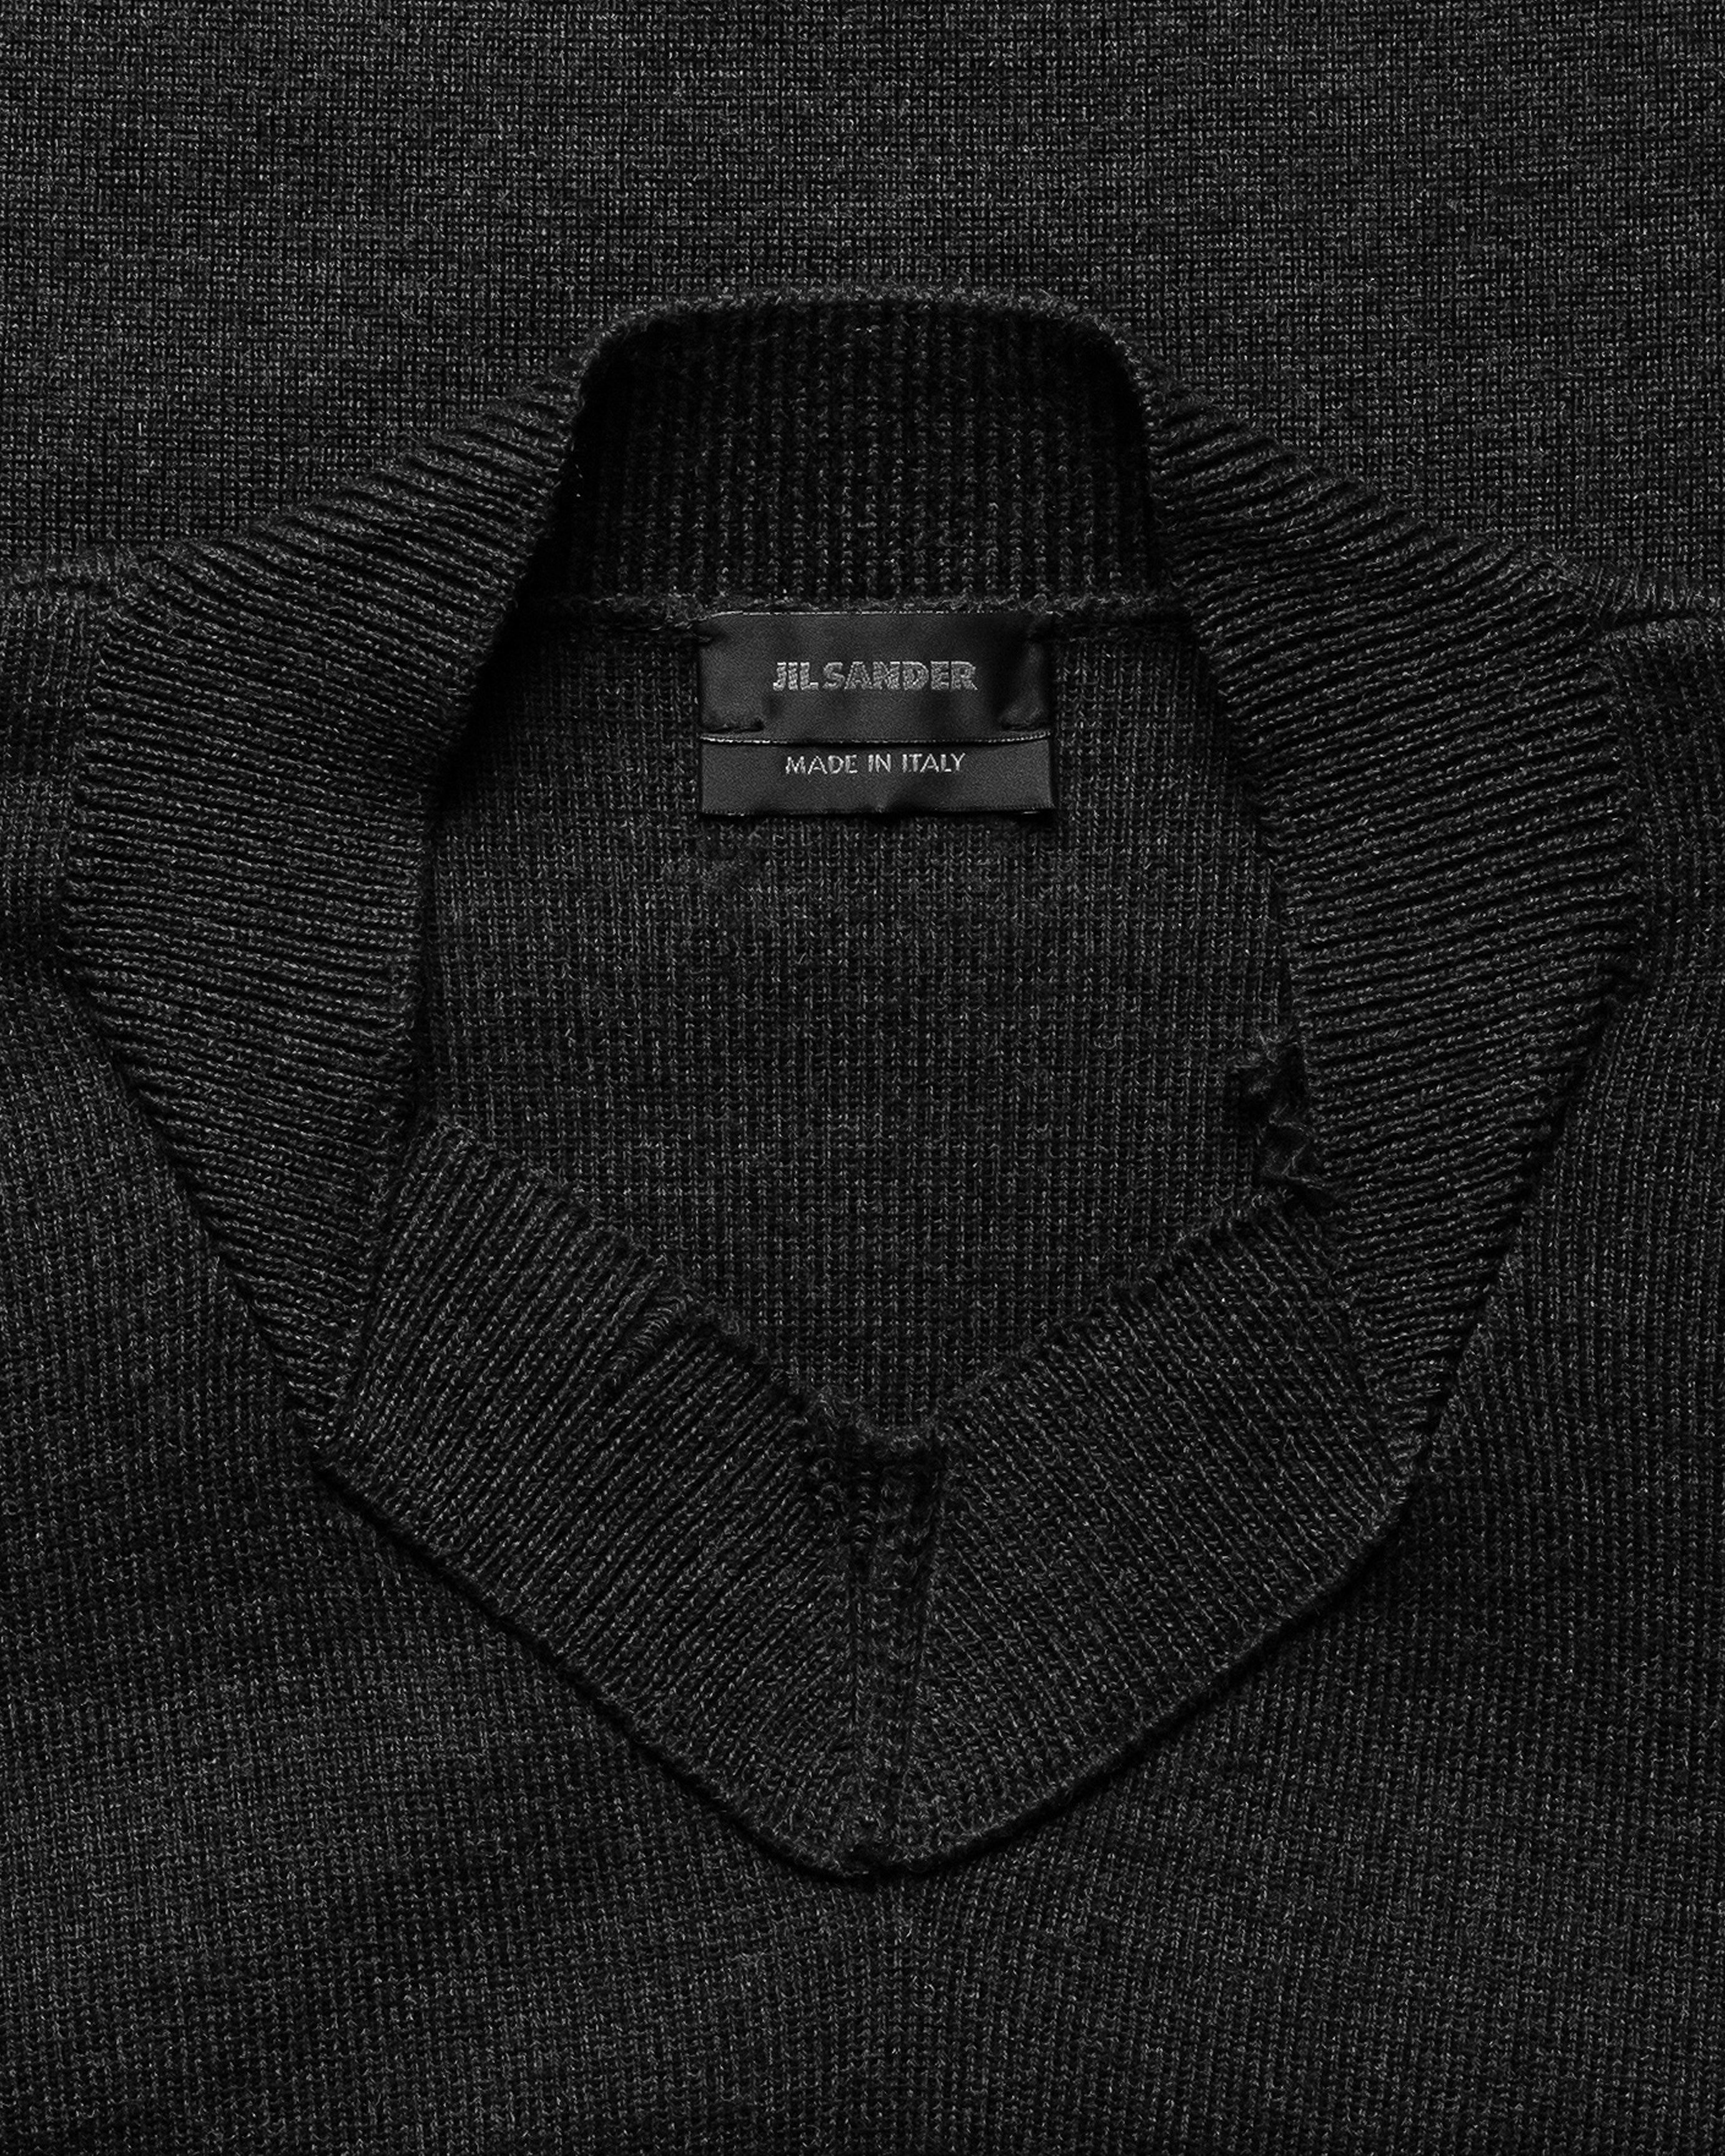 Jil Sander by Raf Simons Merino Wool Knit Sweater - AW07